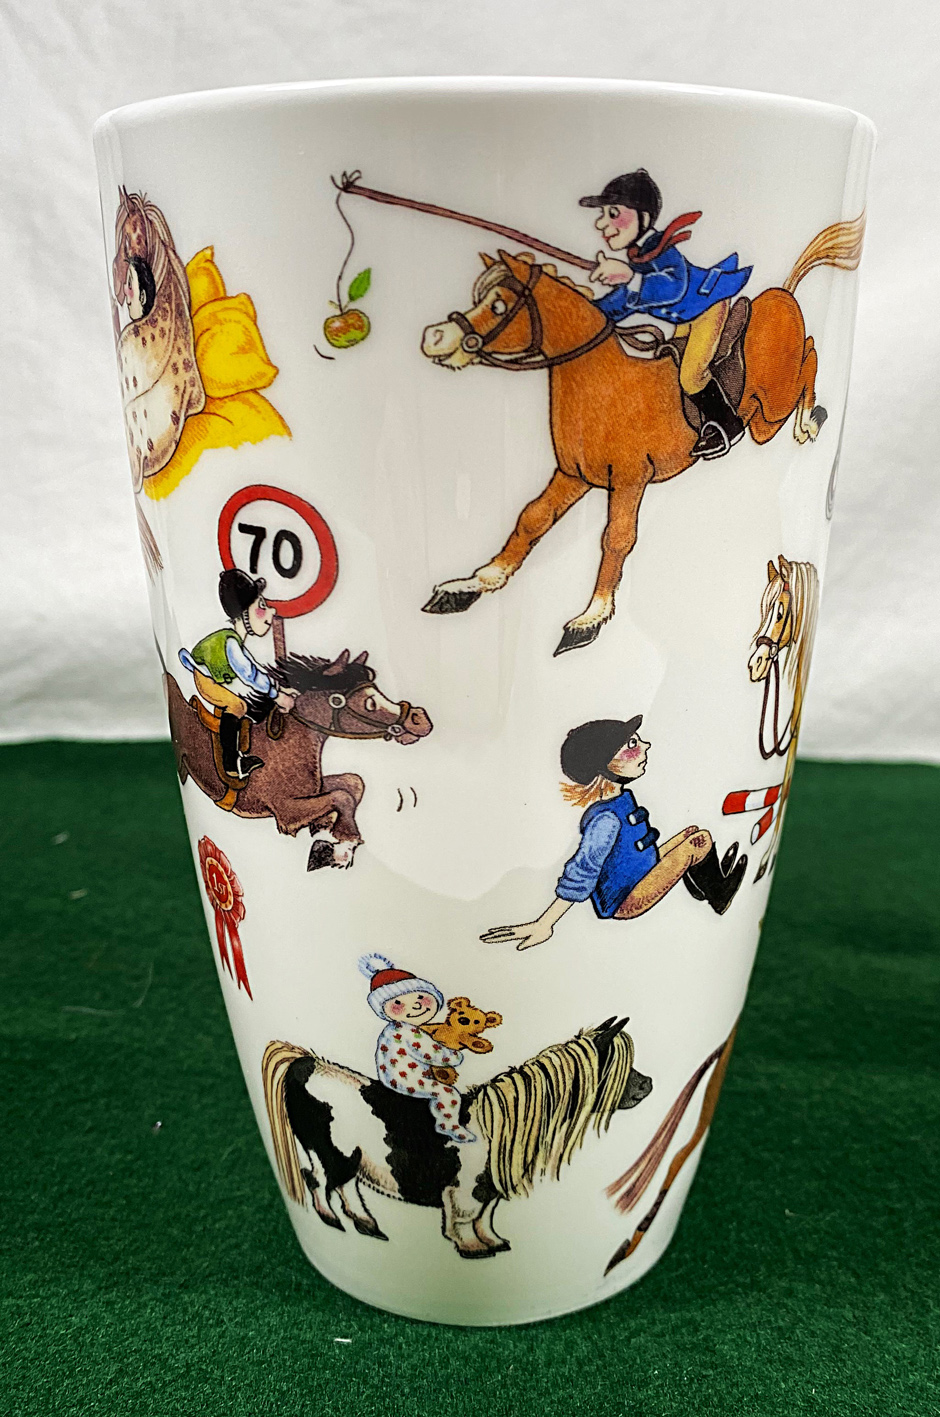 The Henley Horseplay mug is an English fine bone china mug made by Dunoon with a 600ml capacity